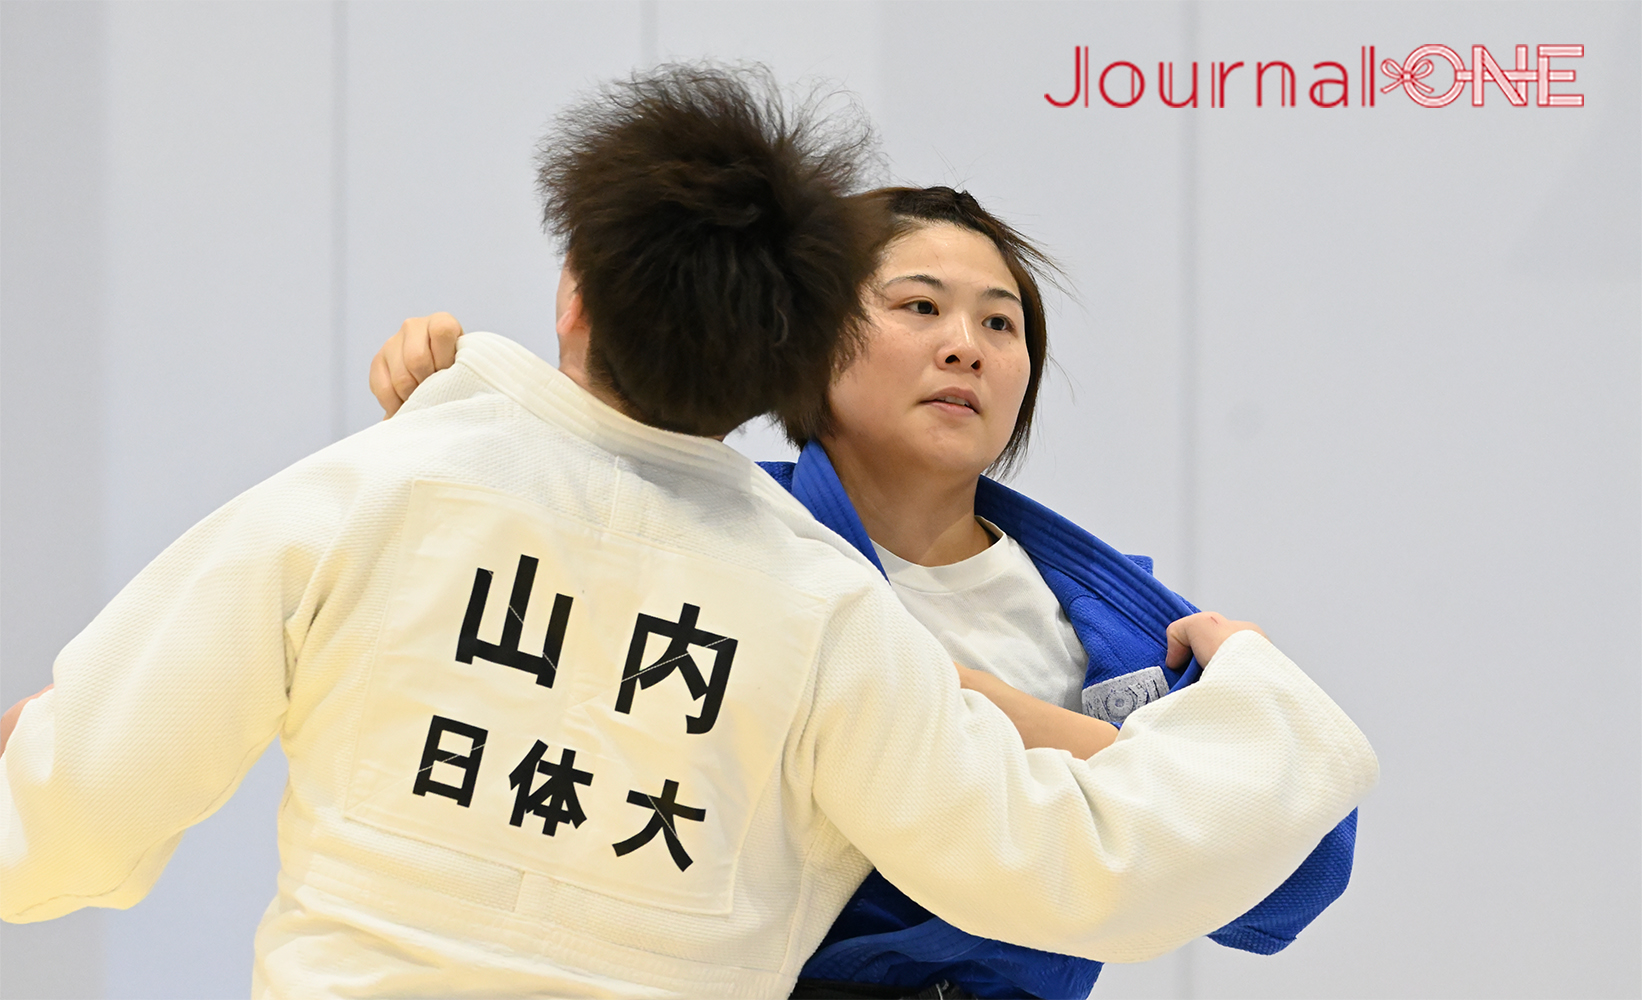 Journal-ONE | Izumi Mao who won the Grand Prix in Tunis in 2018 do Randori.